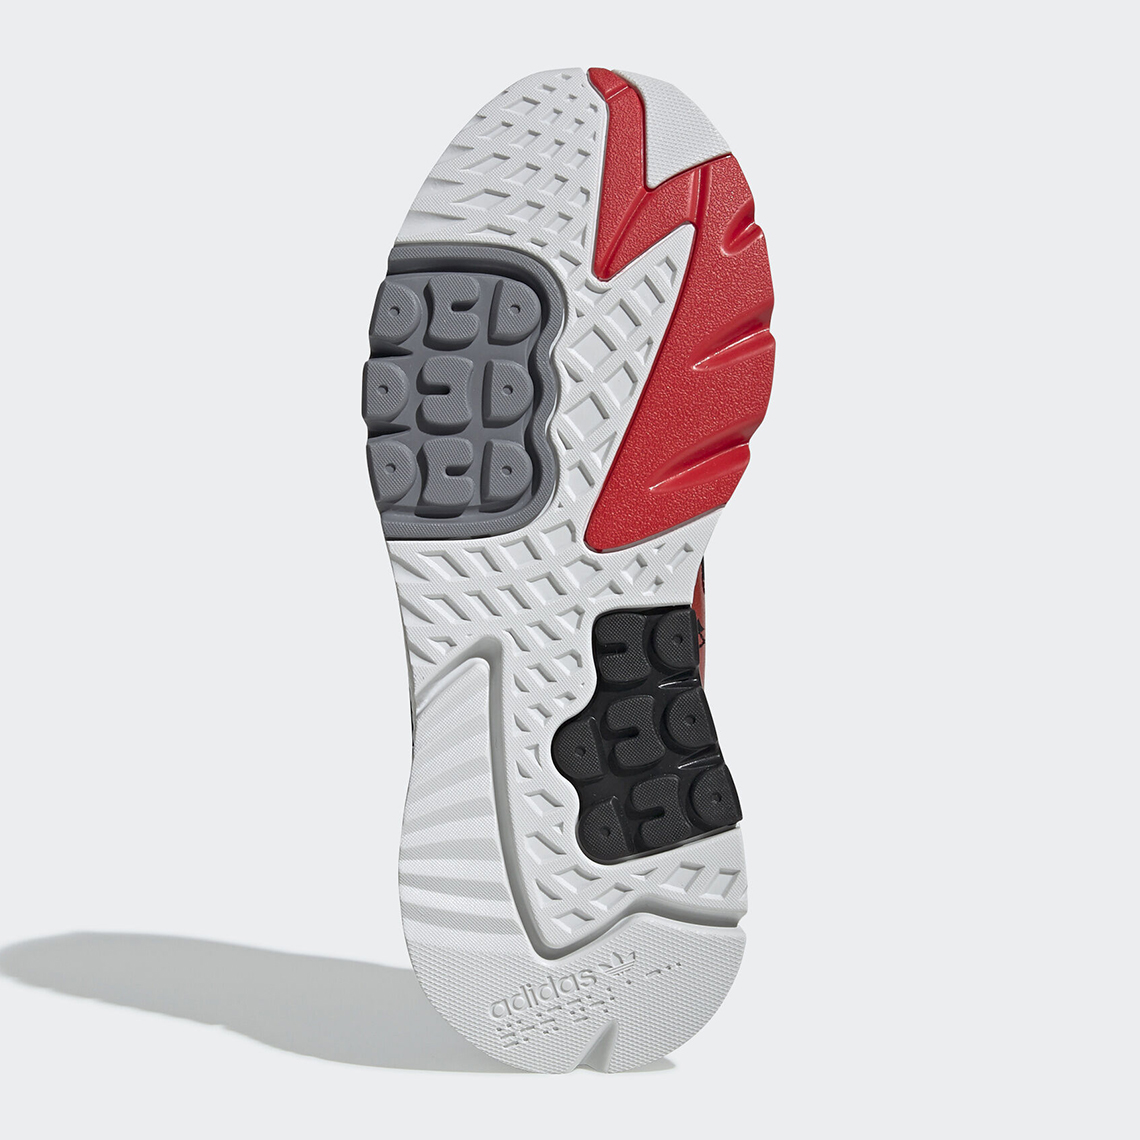 Adidas Nite Jogger 3m Reflective Ef9419 4